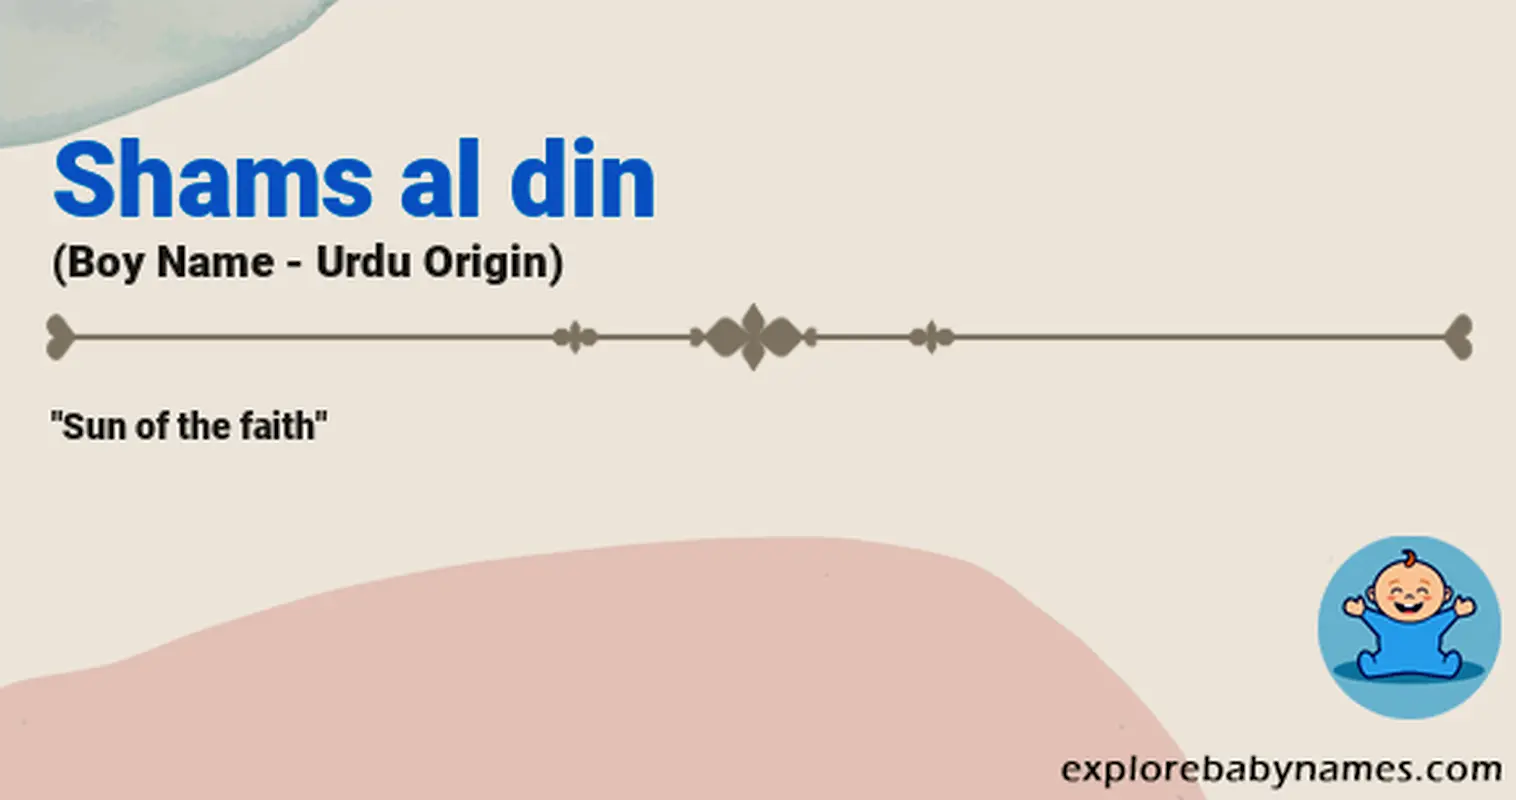 Meaning of Shams al din